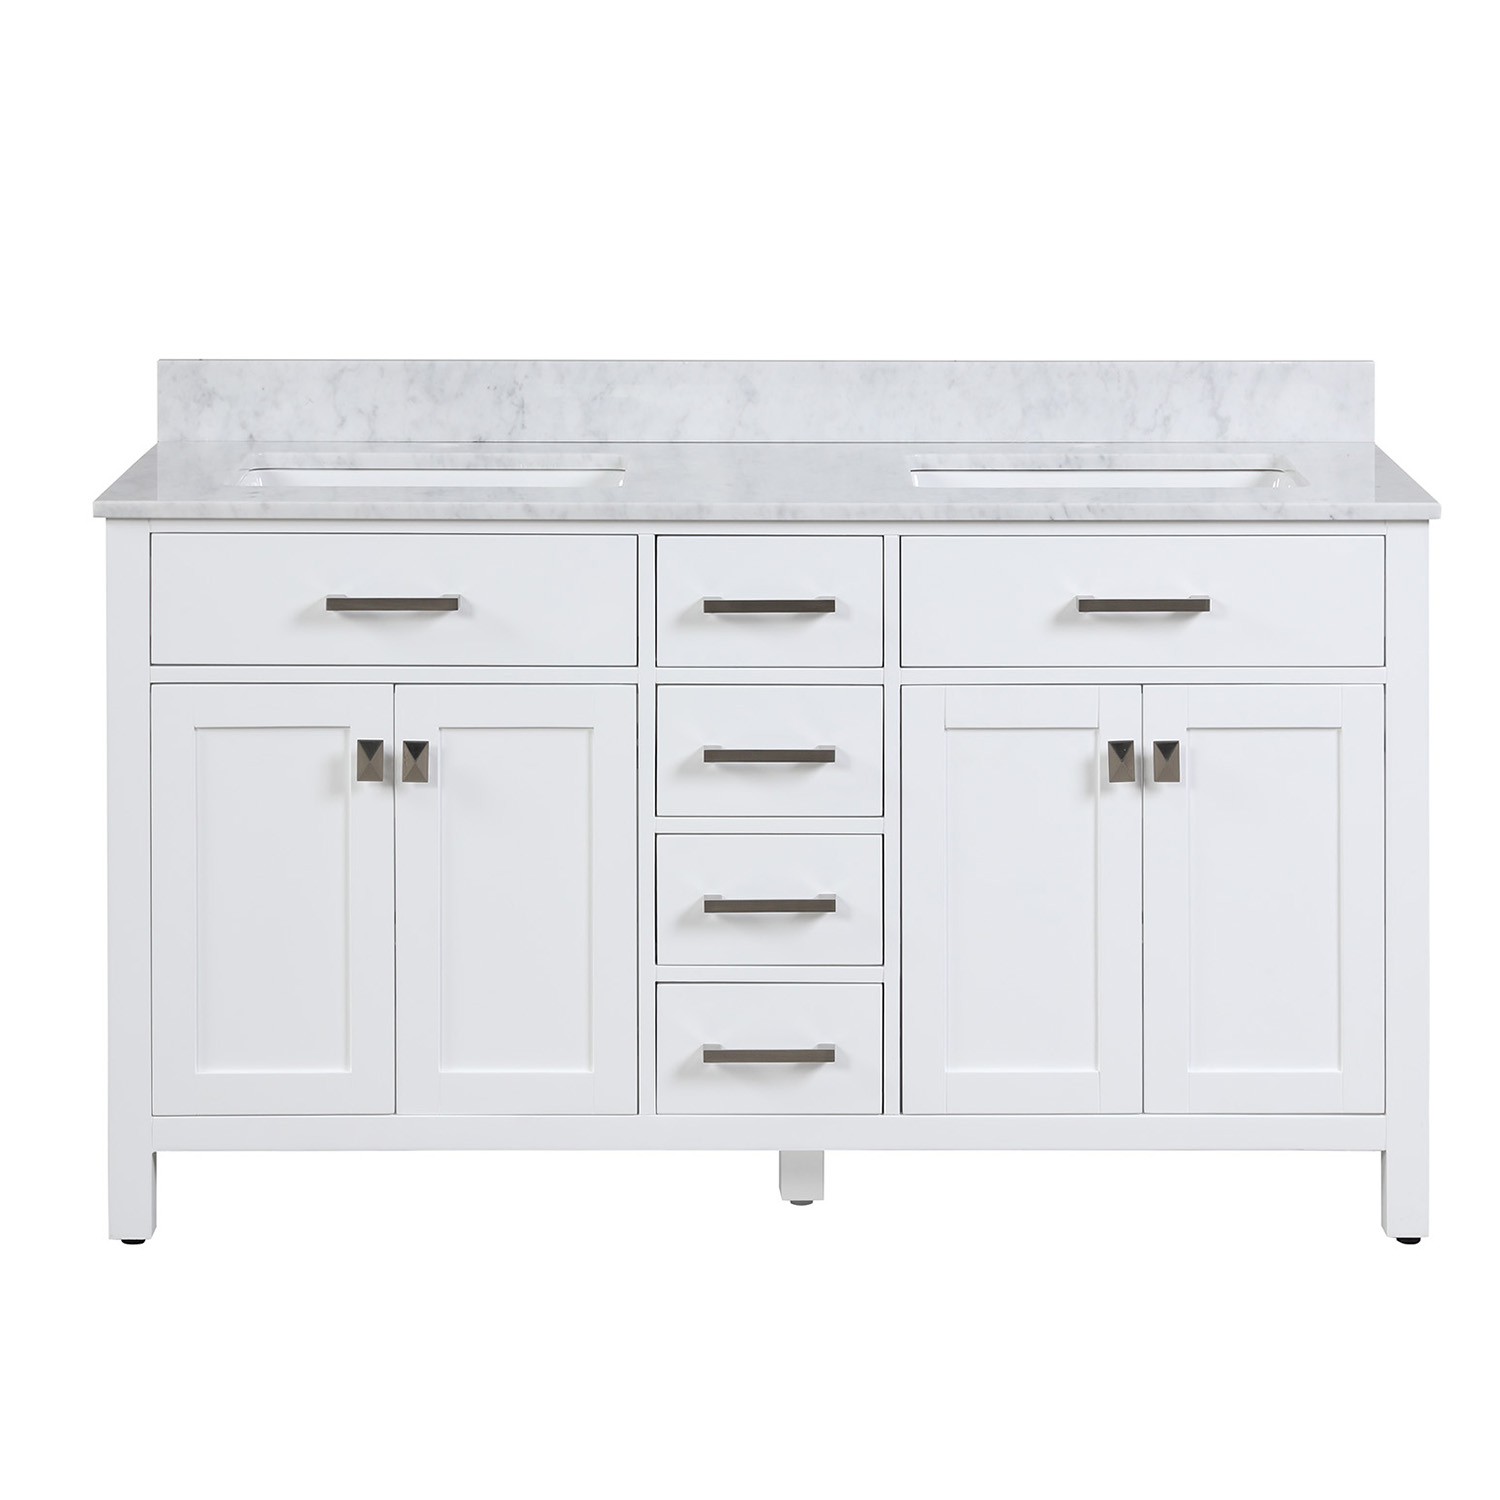 Duko VV160 Rectangular Sink White Bathroom Vanity Cabinet with Carrara White Marble Countertop 